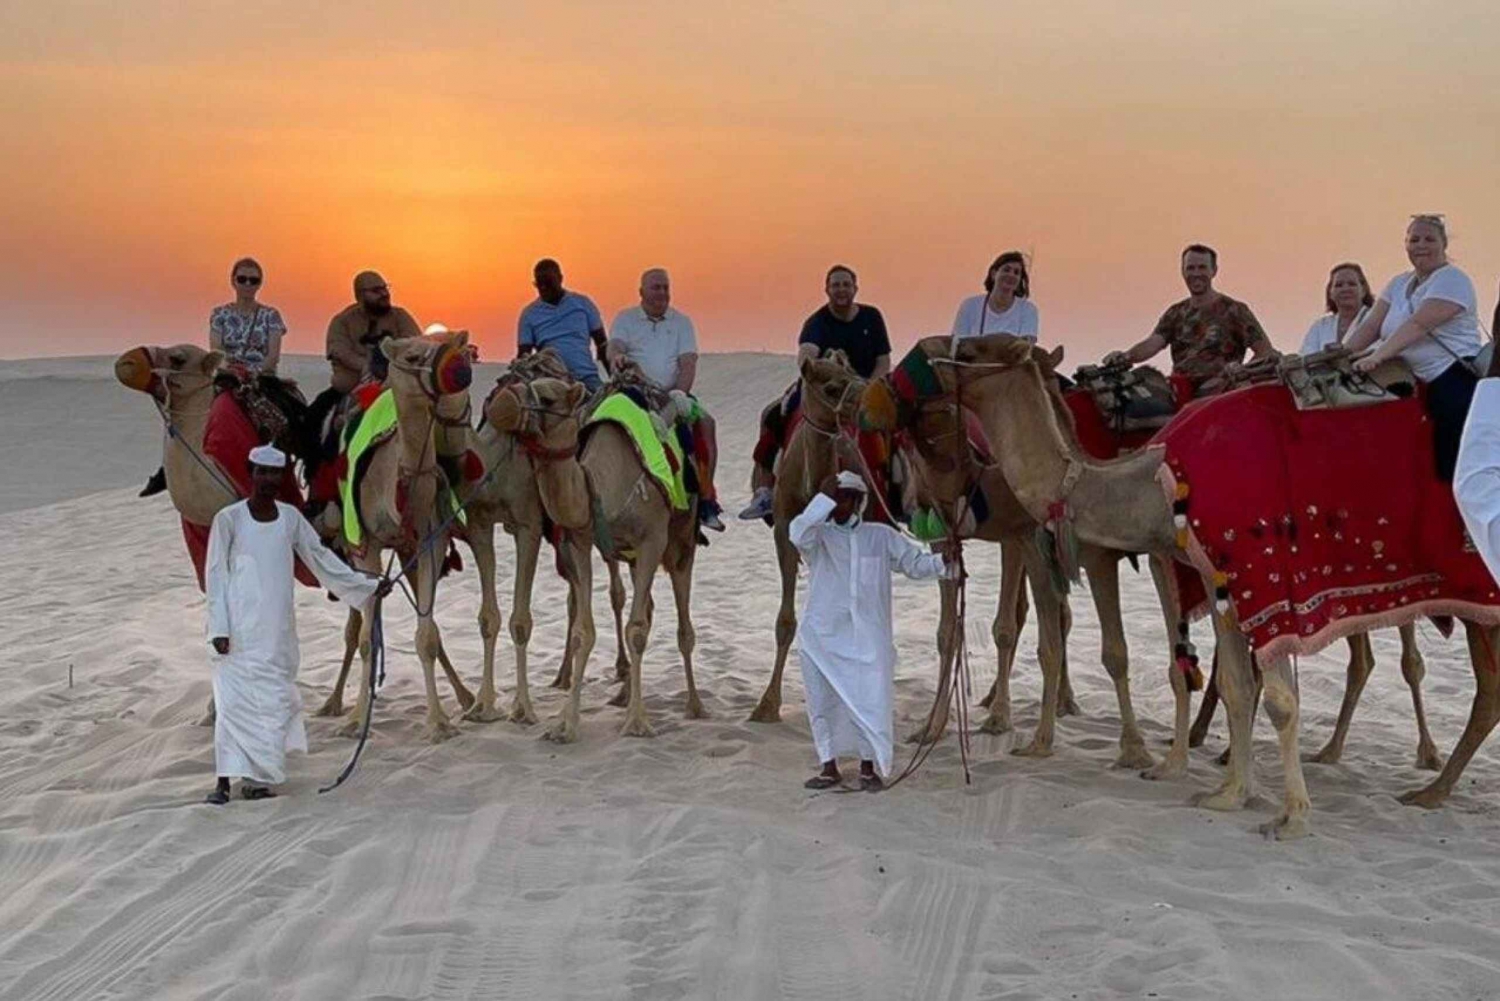 Qatar-Doha ATV Quad Bike, Desert Safari,CamelRide Sand Board